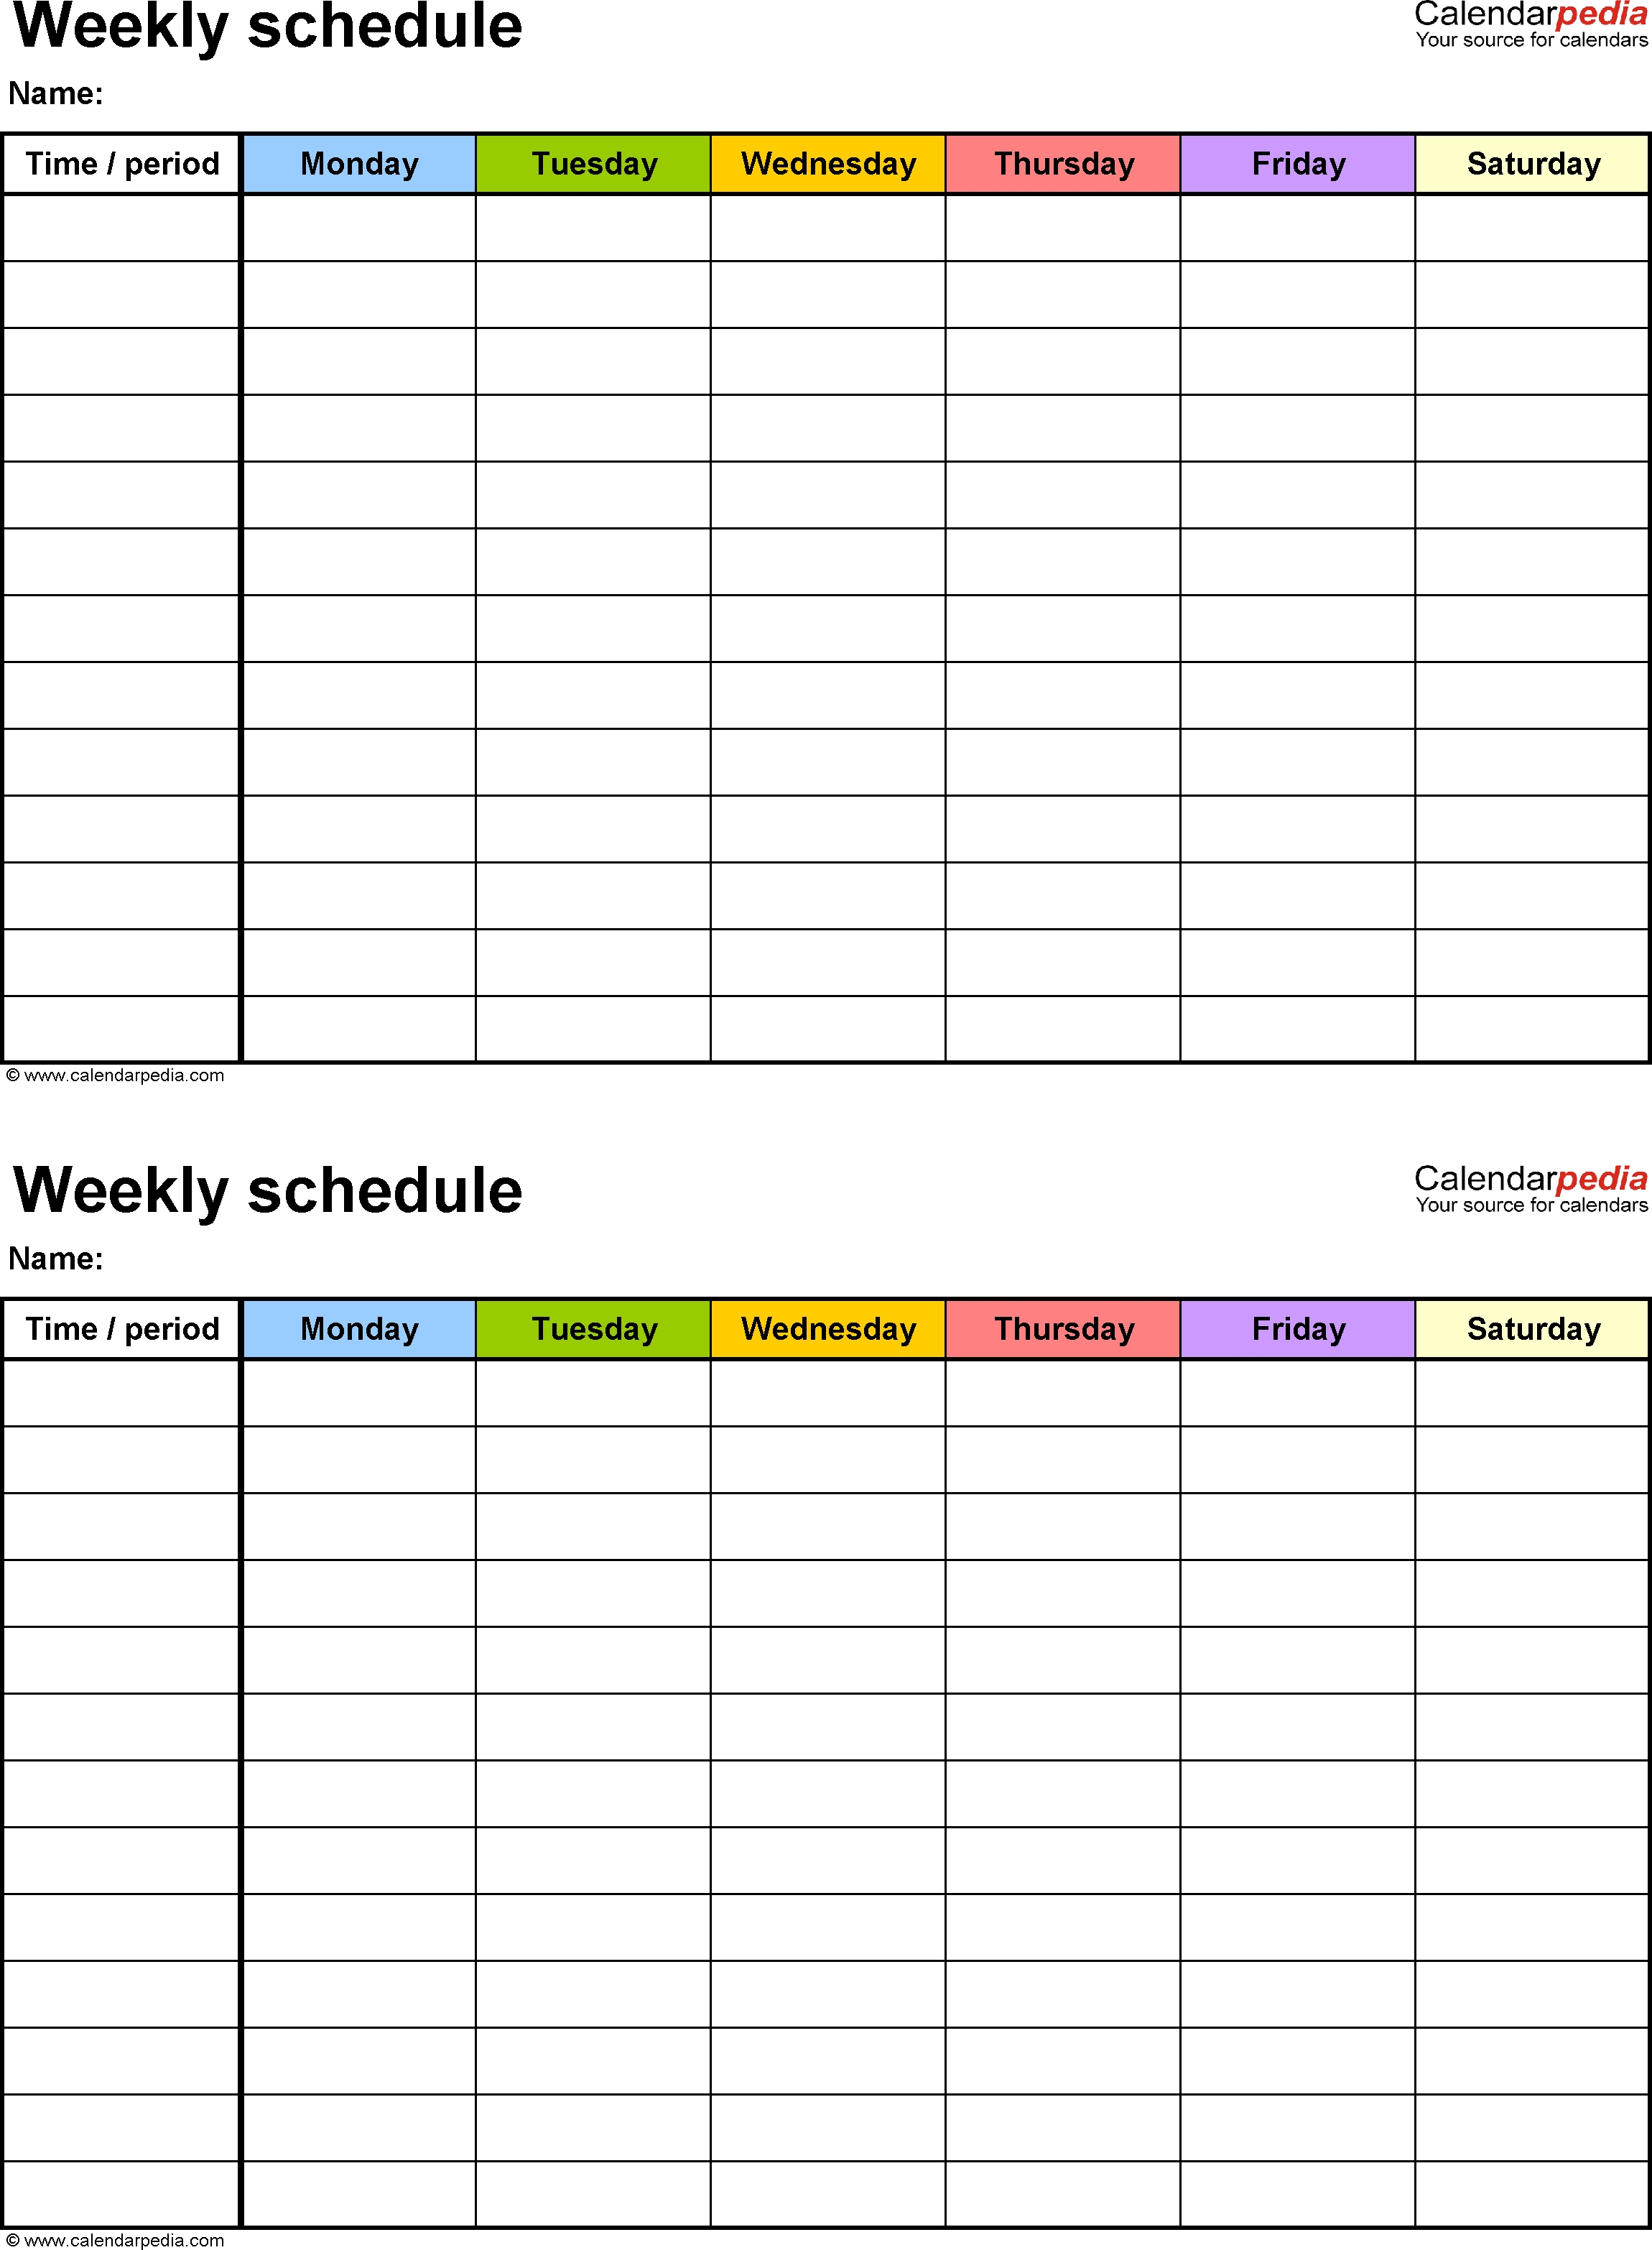 Free Weekly Schedule Templates For Excel - 18 Templates 9 Week School Calendar